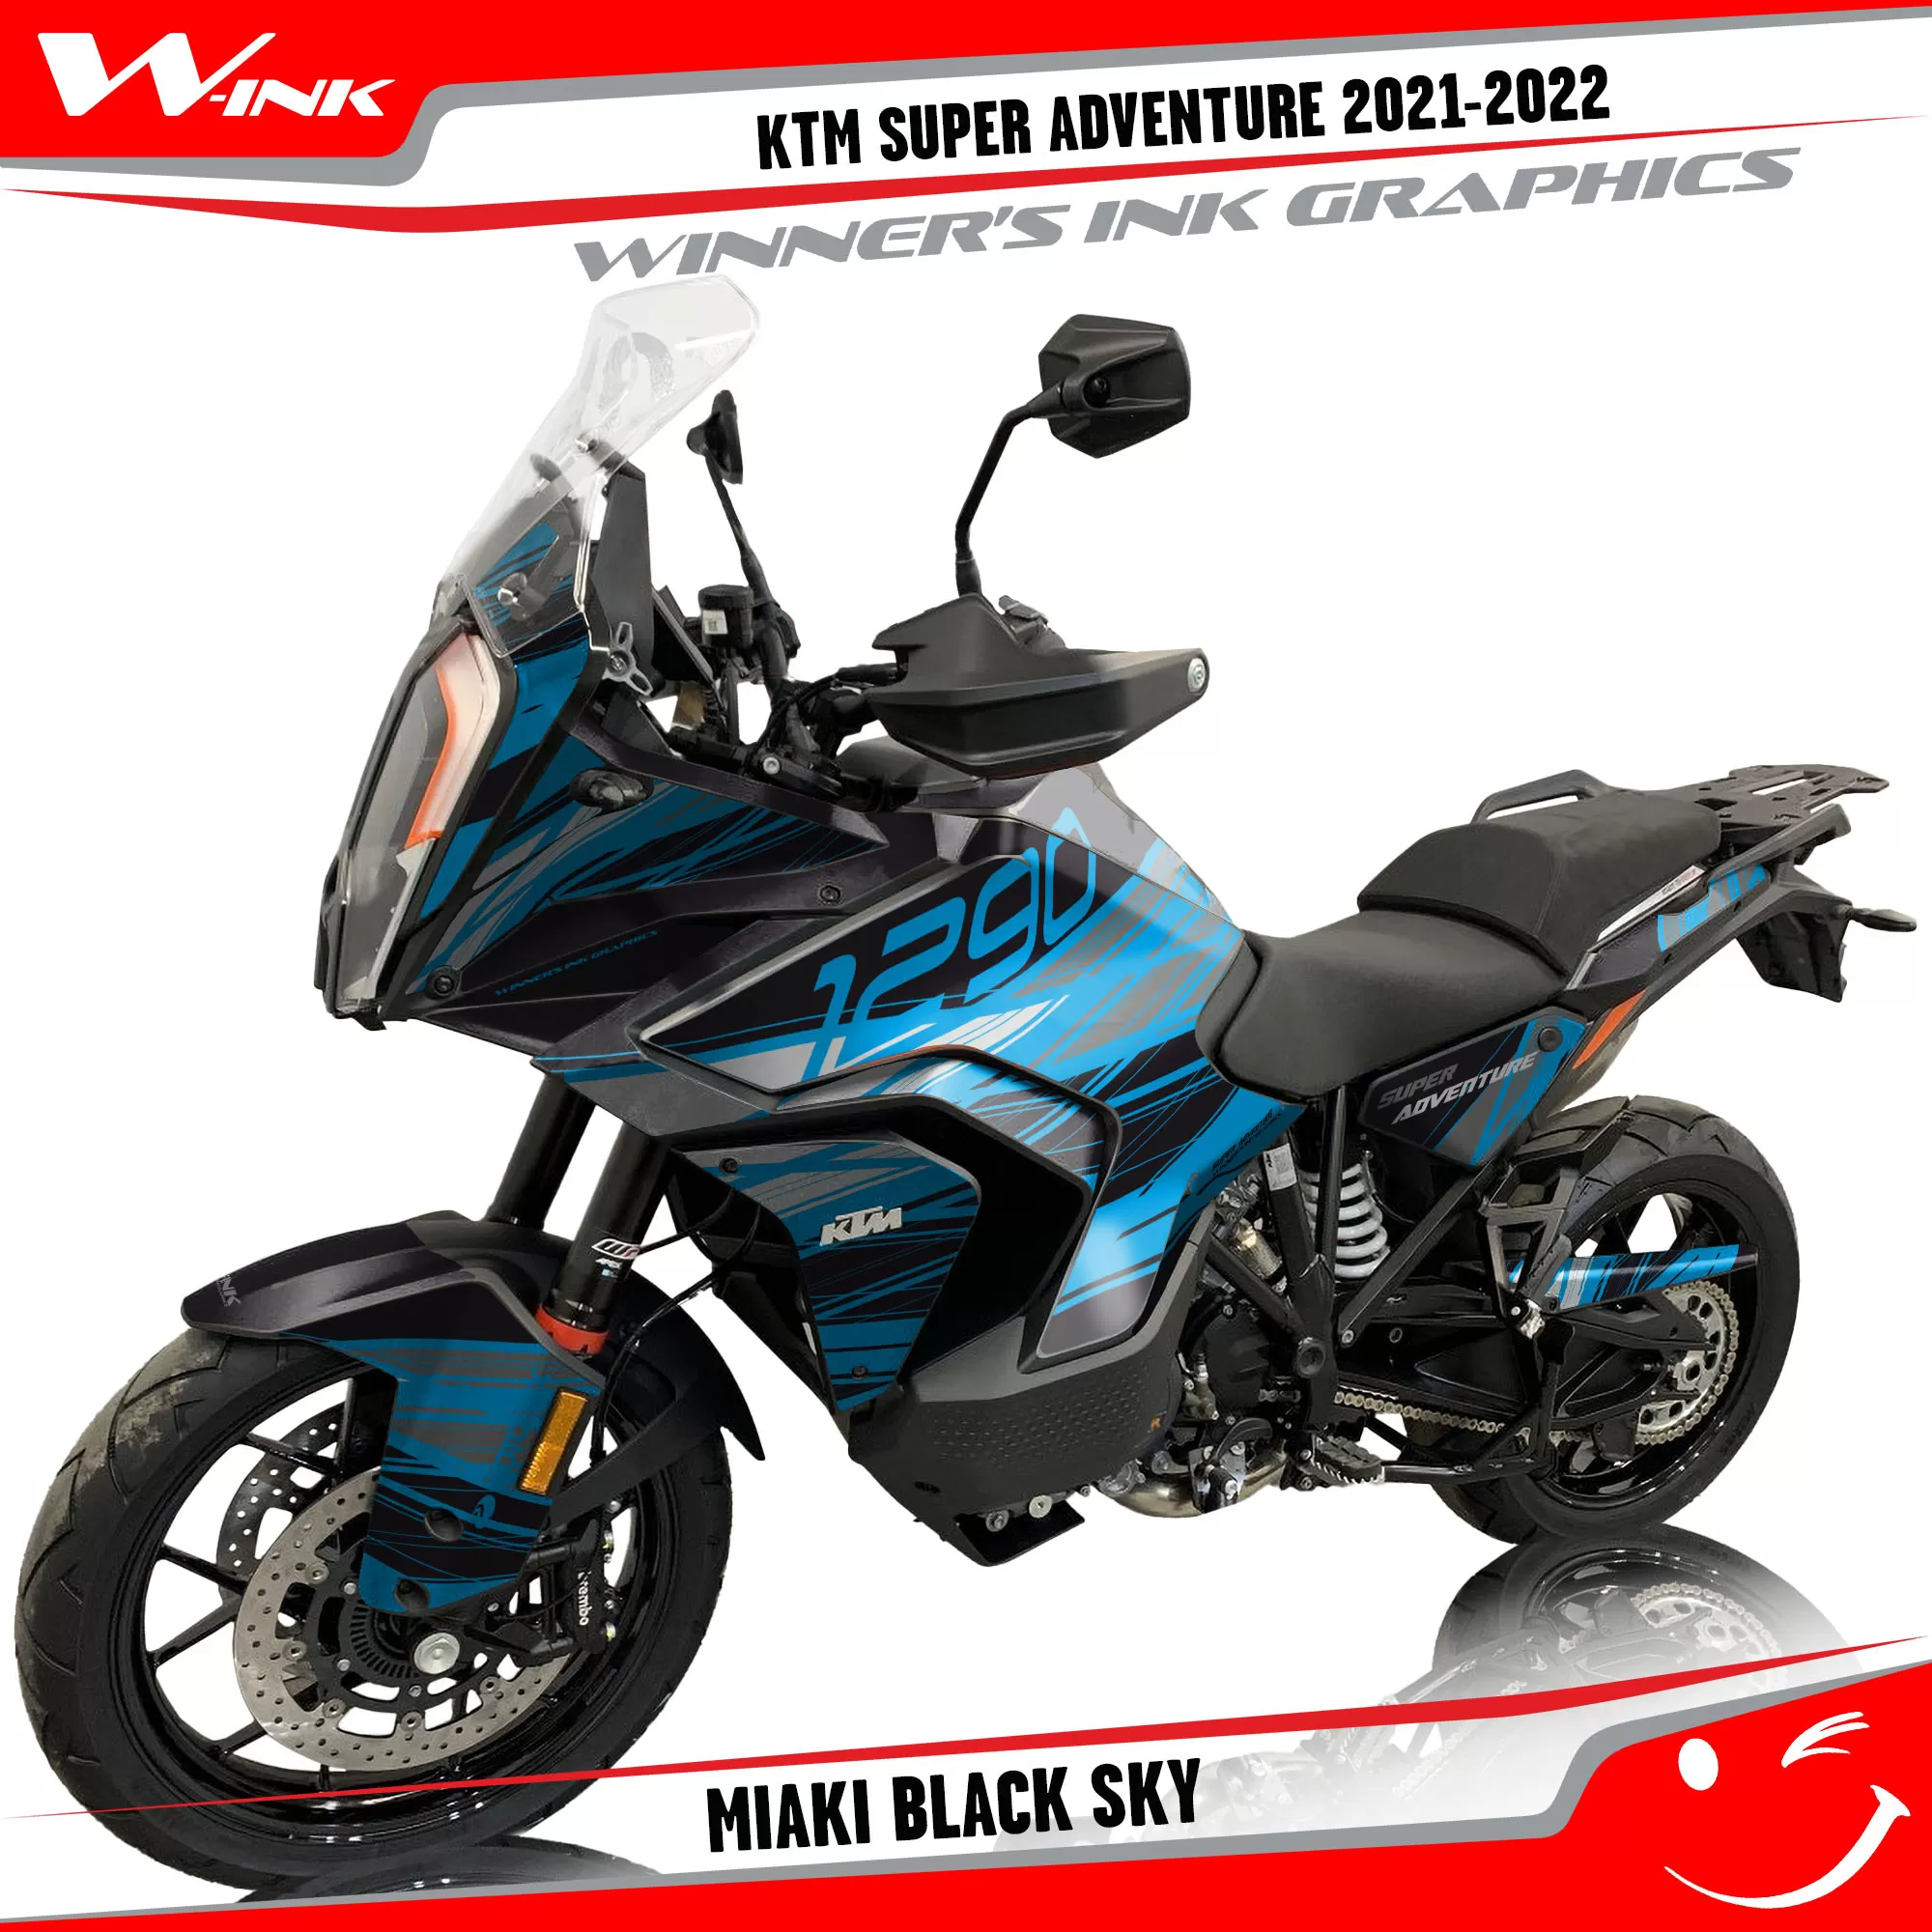 KTM-Super-Adventure-S-2021-2022-graphics-kit-and-decals-with-designs-Miaki-Black-Sky